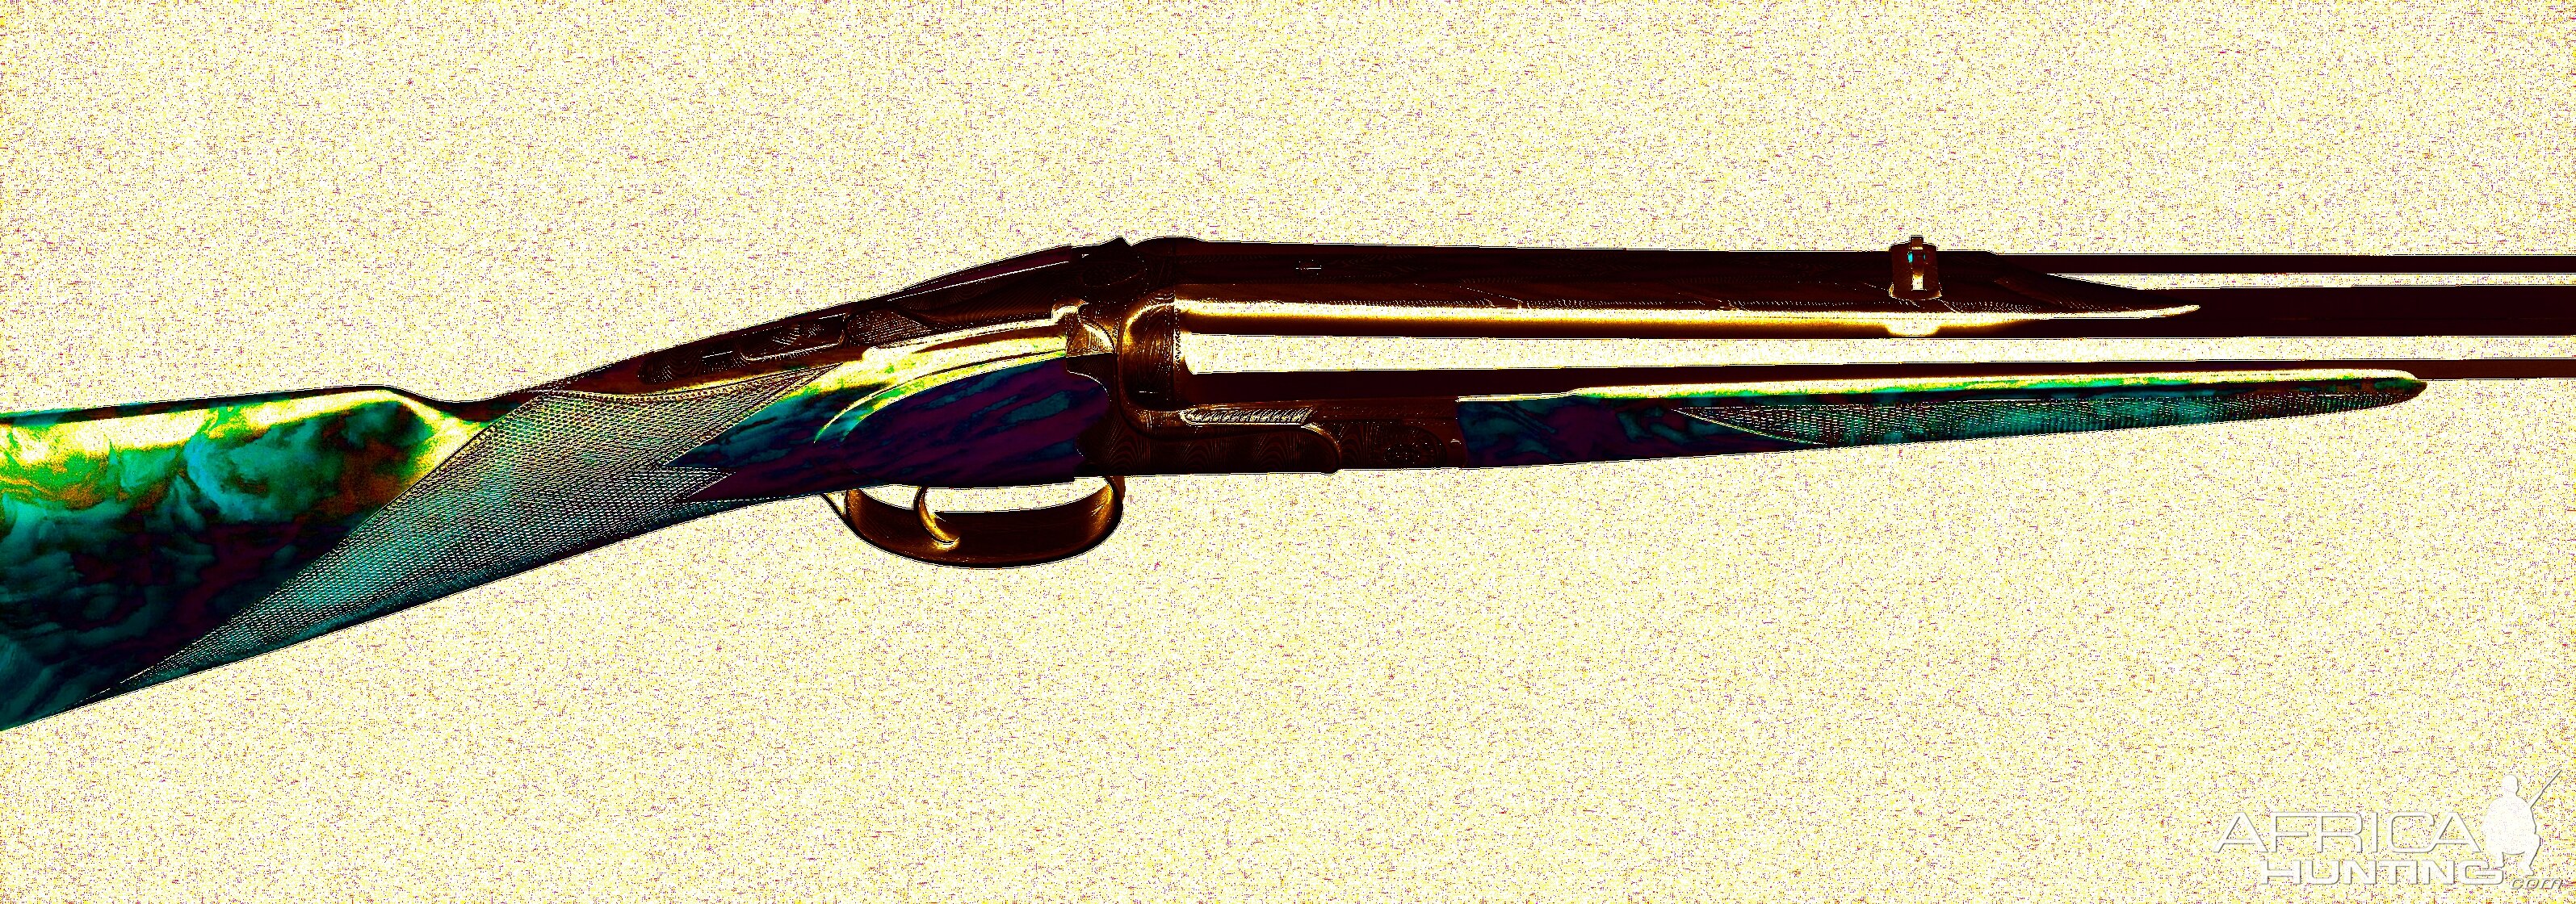 Verney-Carron Double Rifle